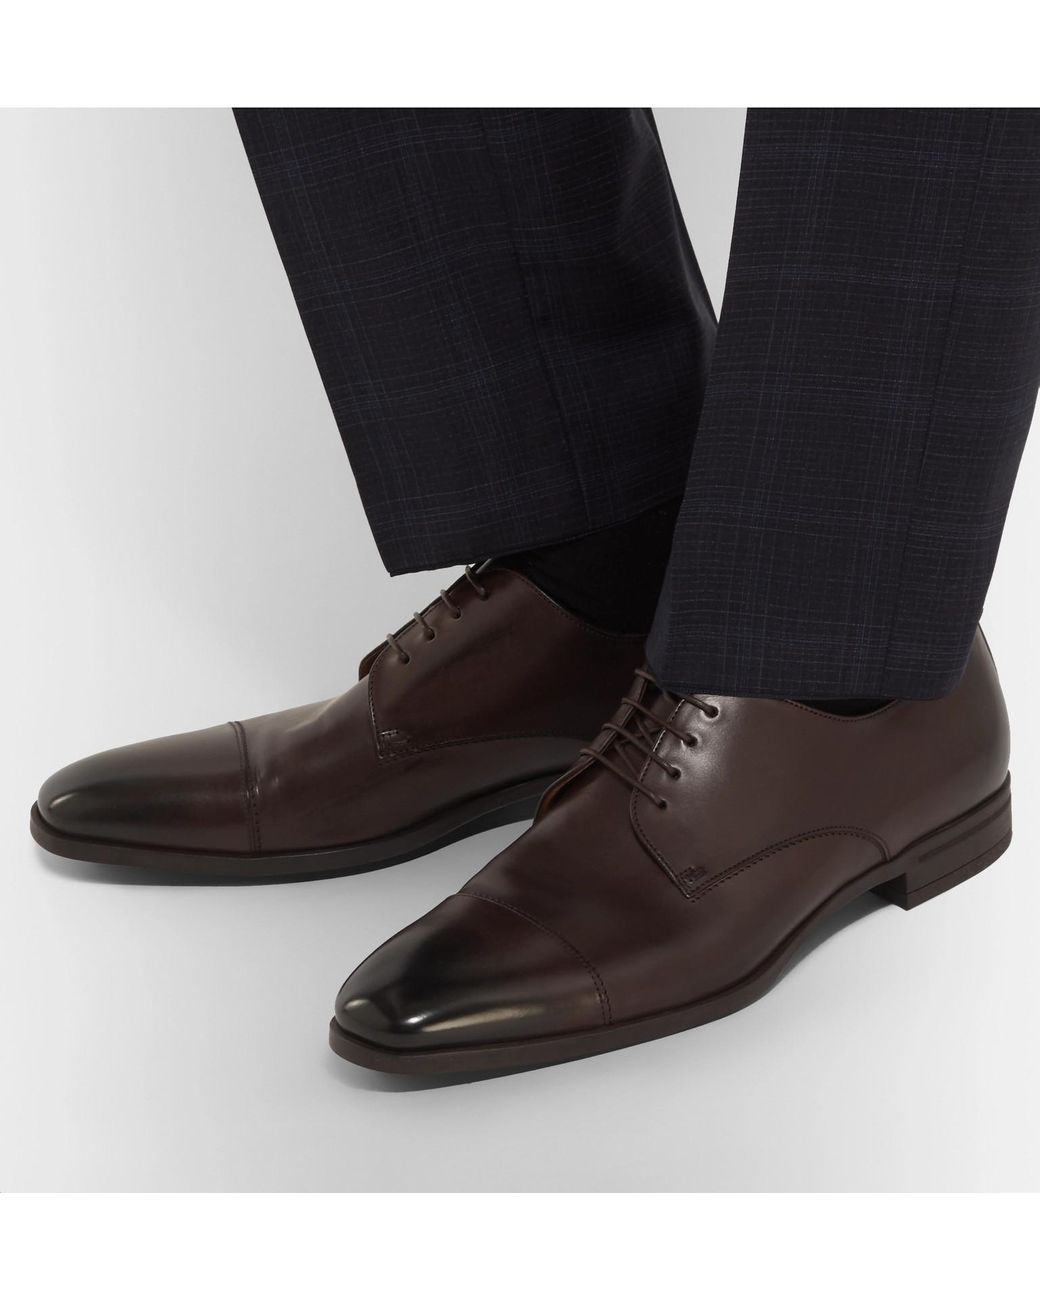 BOSS by HUGO BOSS Kensington Leather Derby Shoes in Brown for Men | Lyst